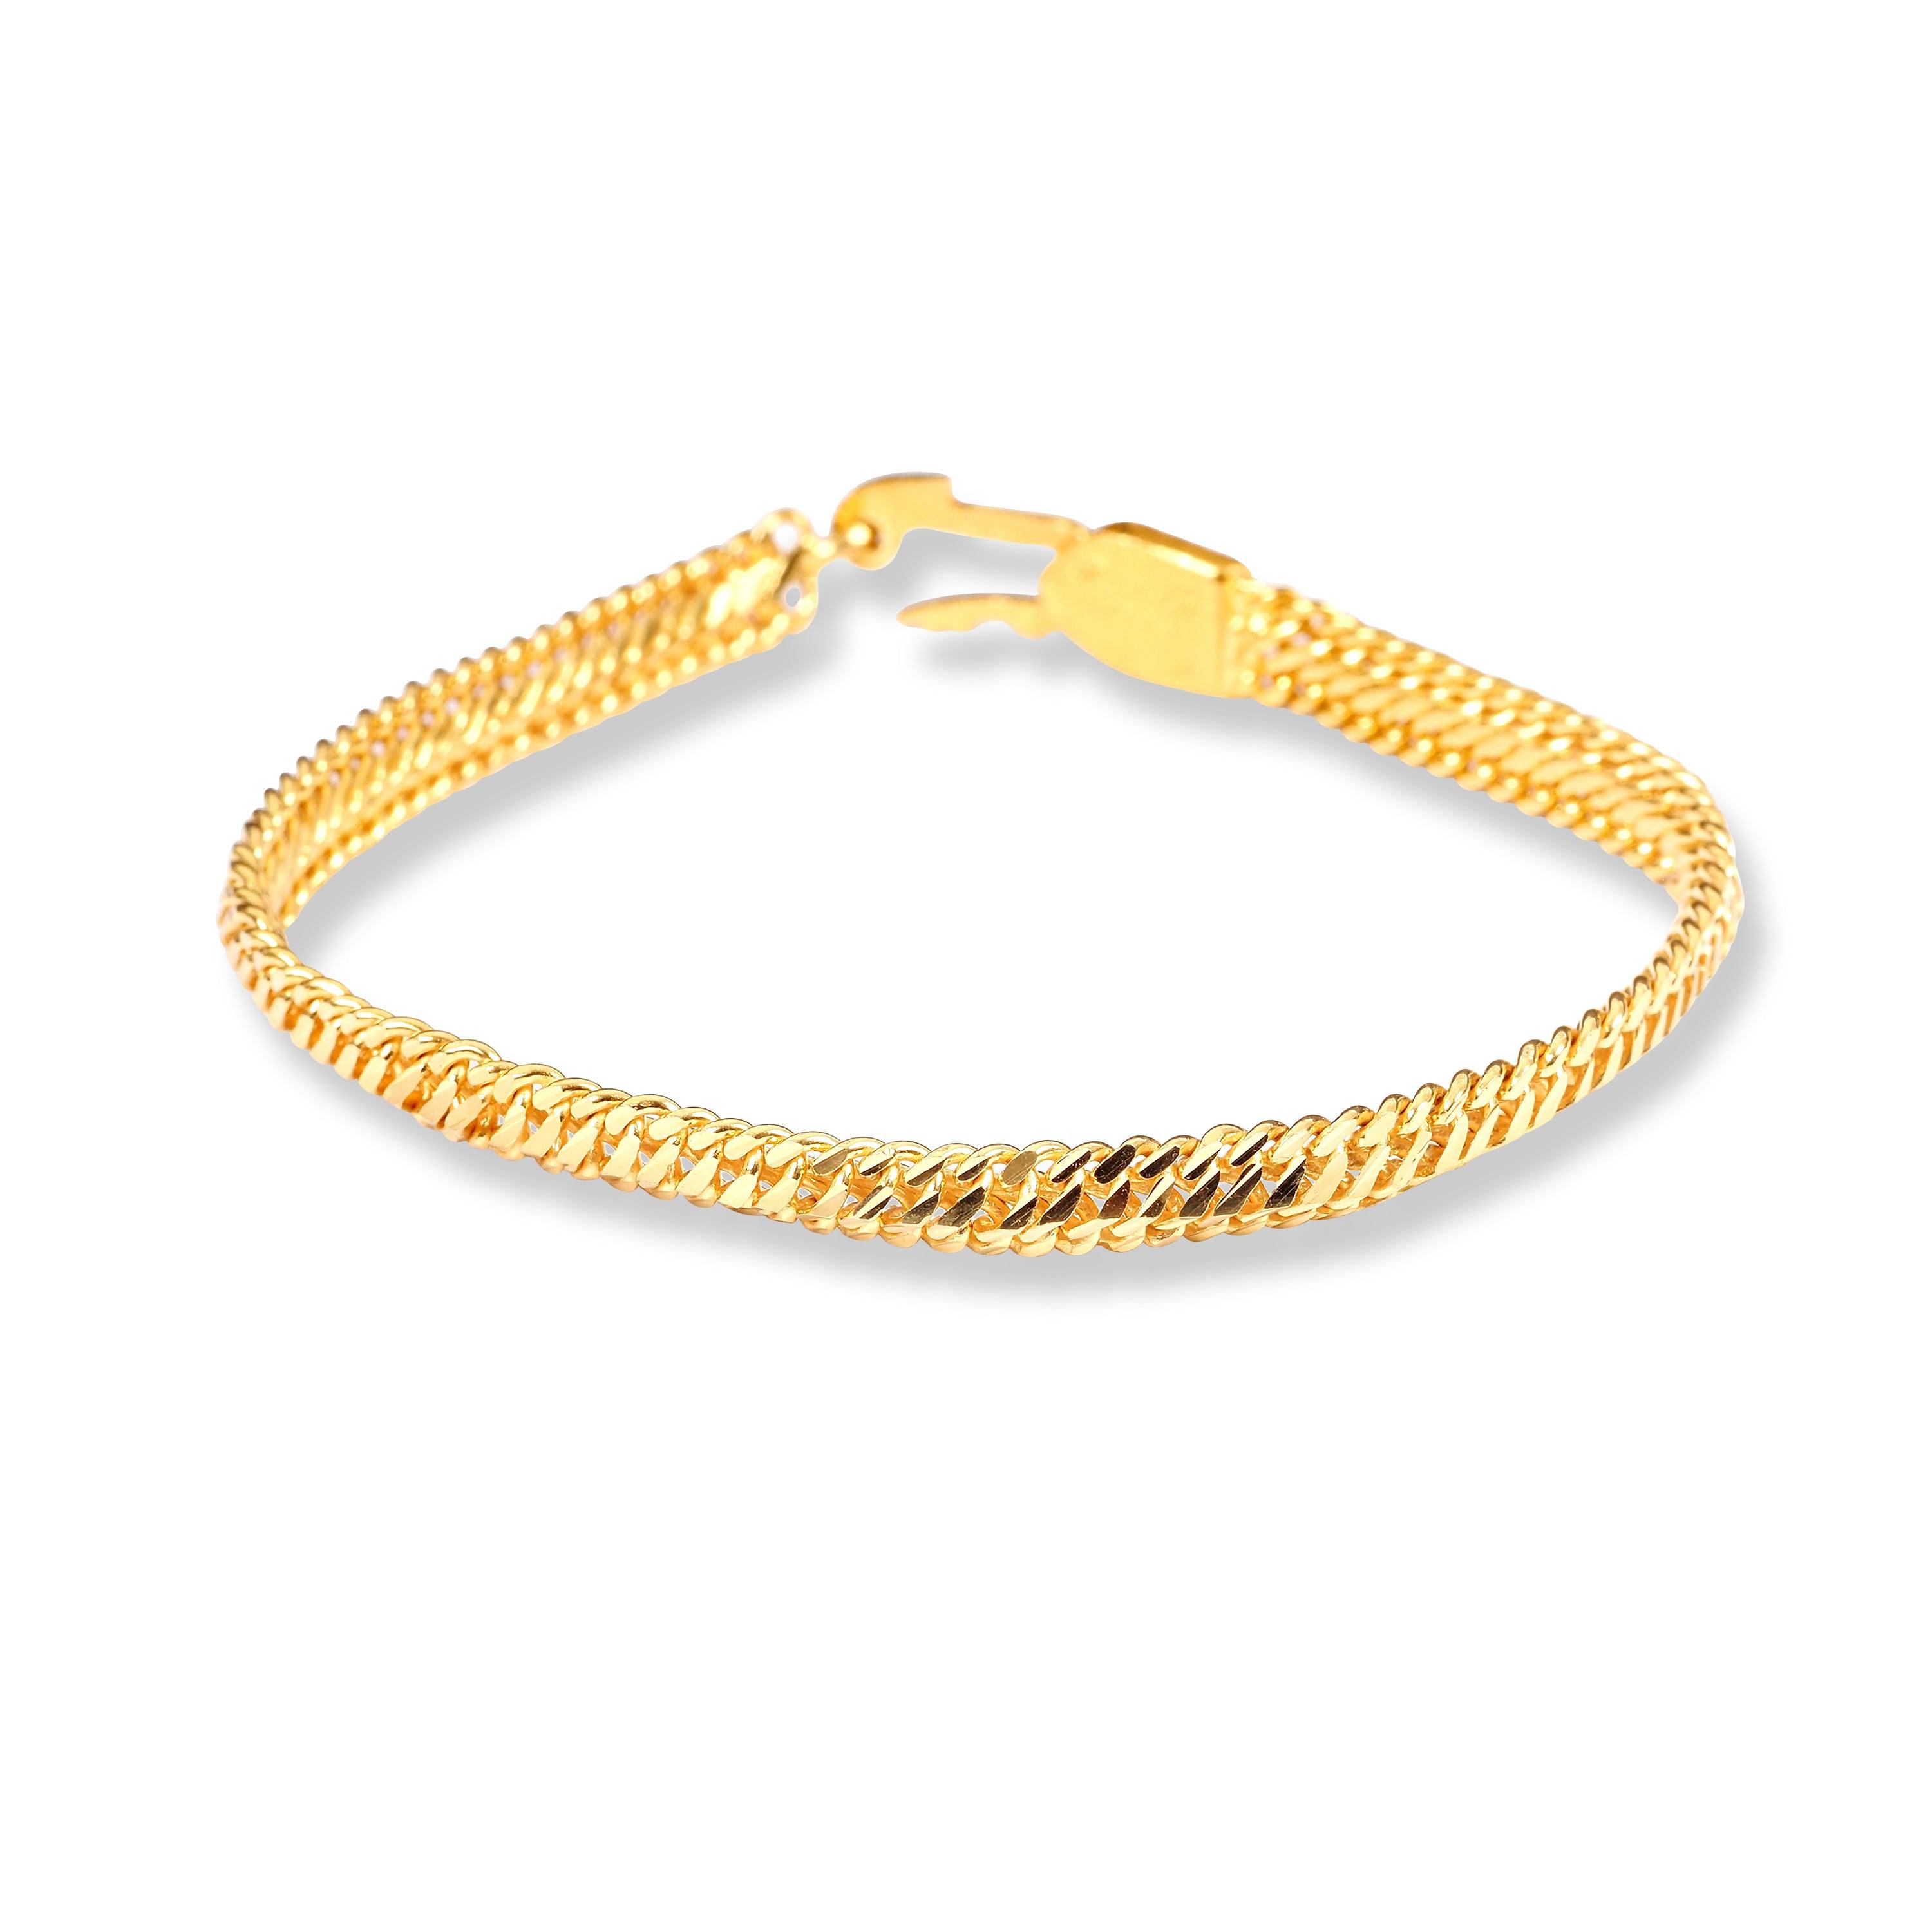 22ct Gold Gents Bracelet with U Push Clasp GBR-8325 - Minar Jewellers